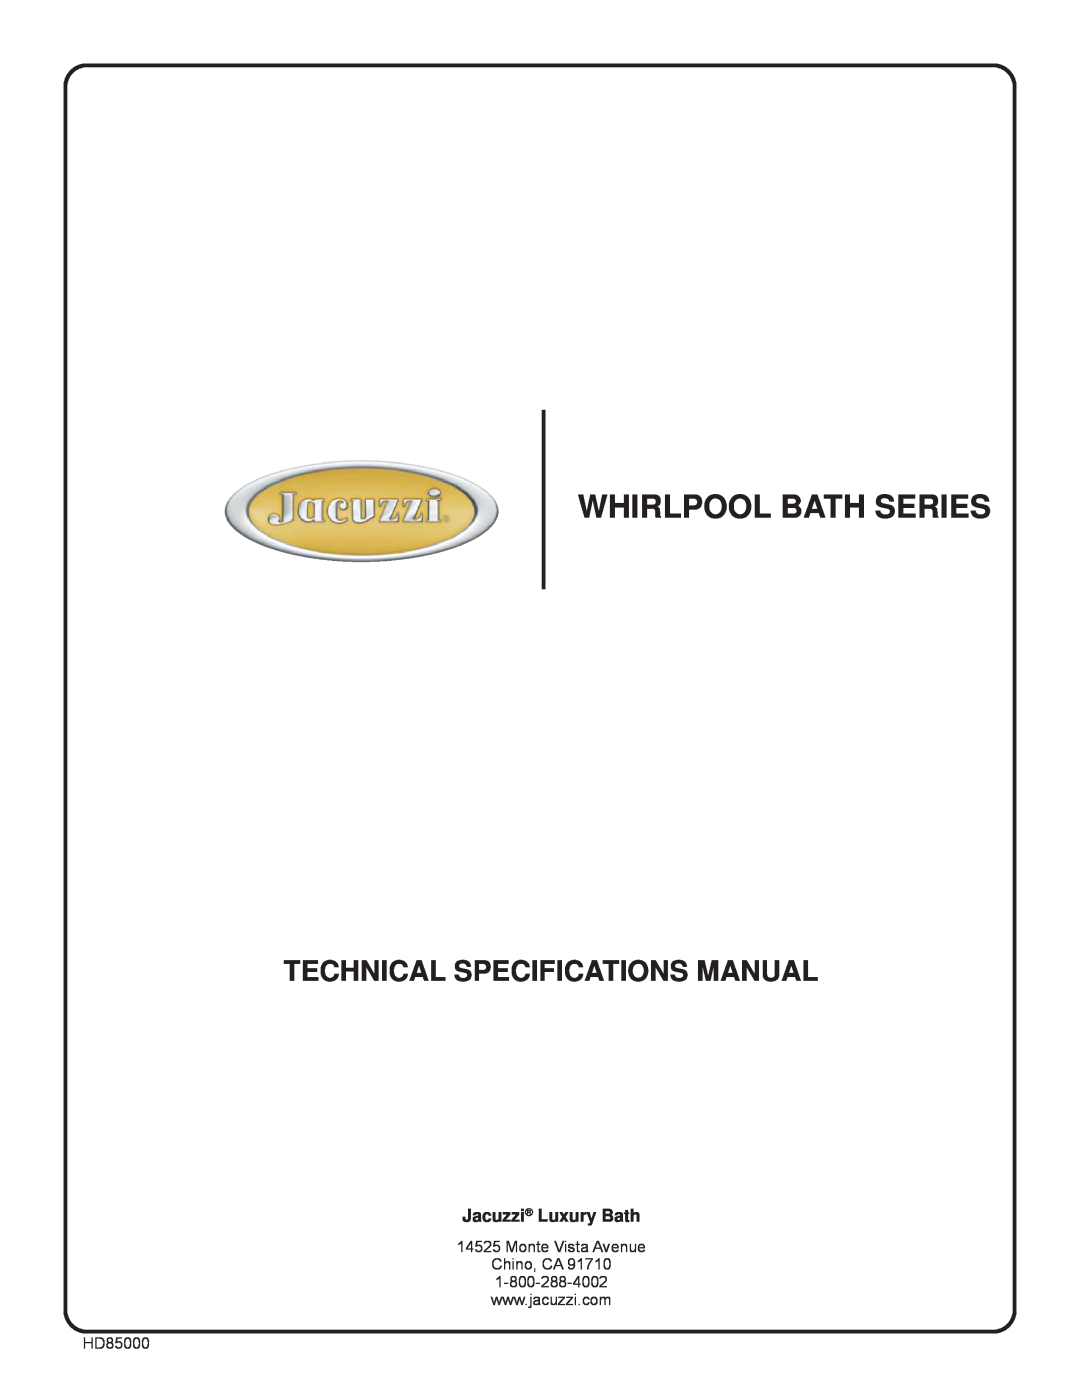 Jacuzzi HD85000 technical specifications Whirlpool Bath Series, Technical Specifications Manual, Jacuzzi Luxury Bath 